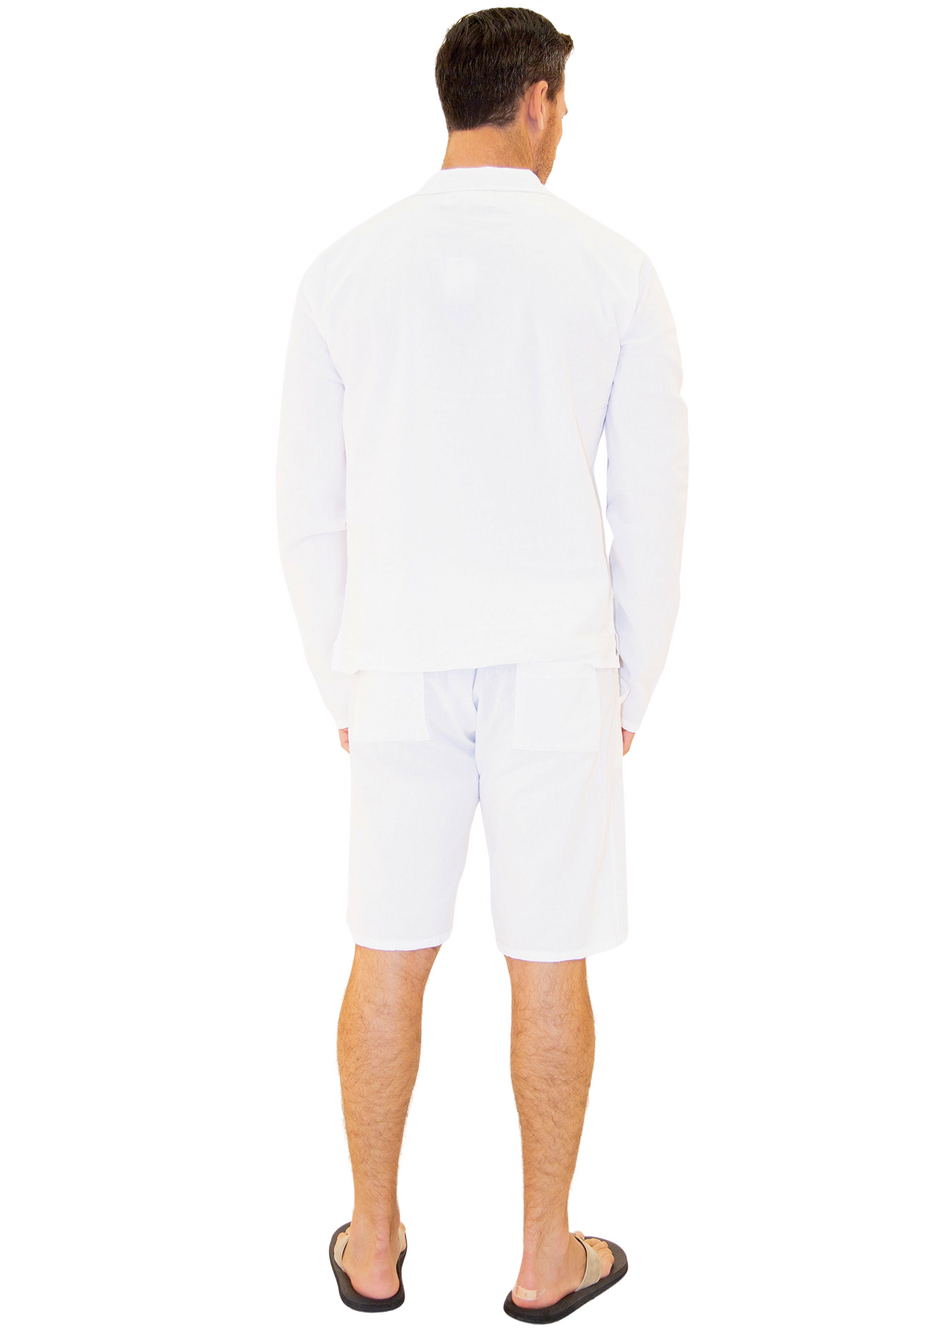 GZ1015 - White Cotton Drawstring Pocket Long Sleeves Shirt